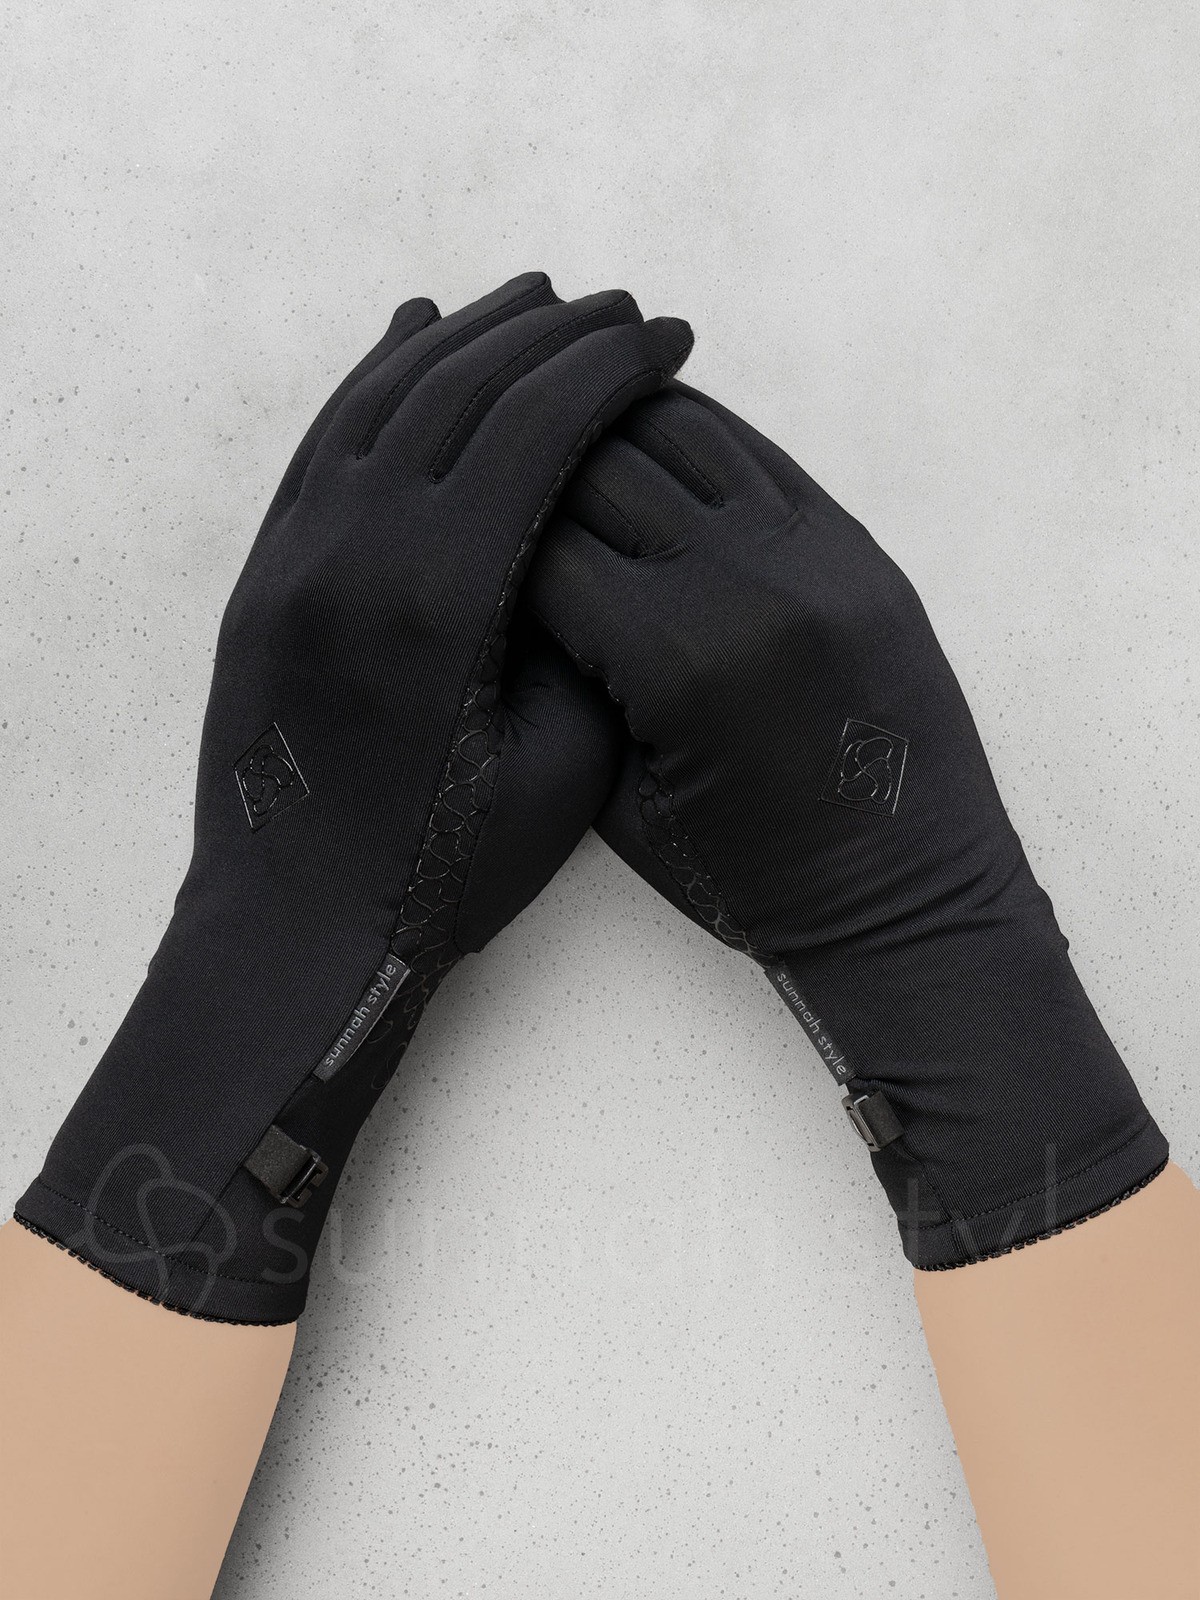 Sunnah Style - Esteem Signature Gloves v2 - Wrist Length